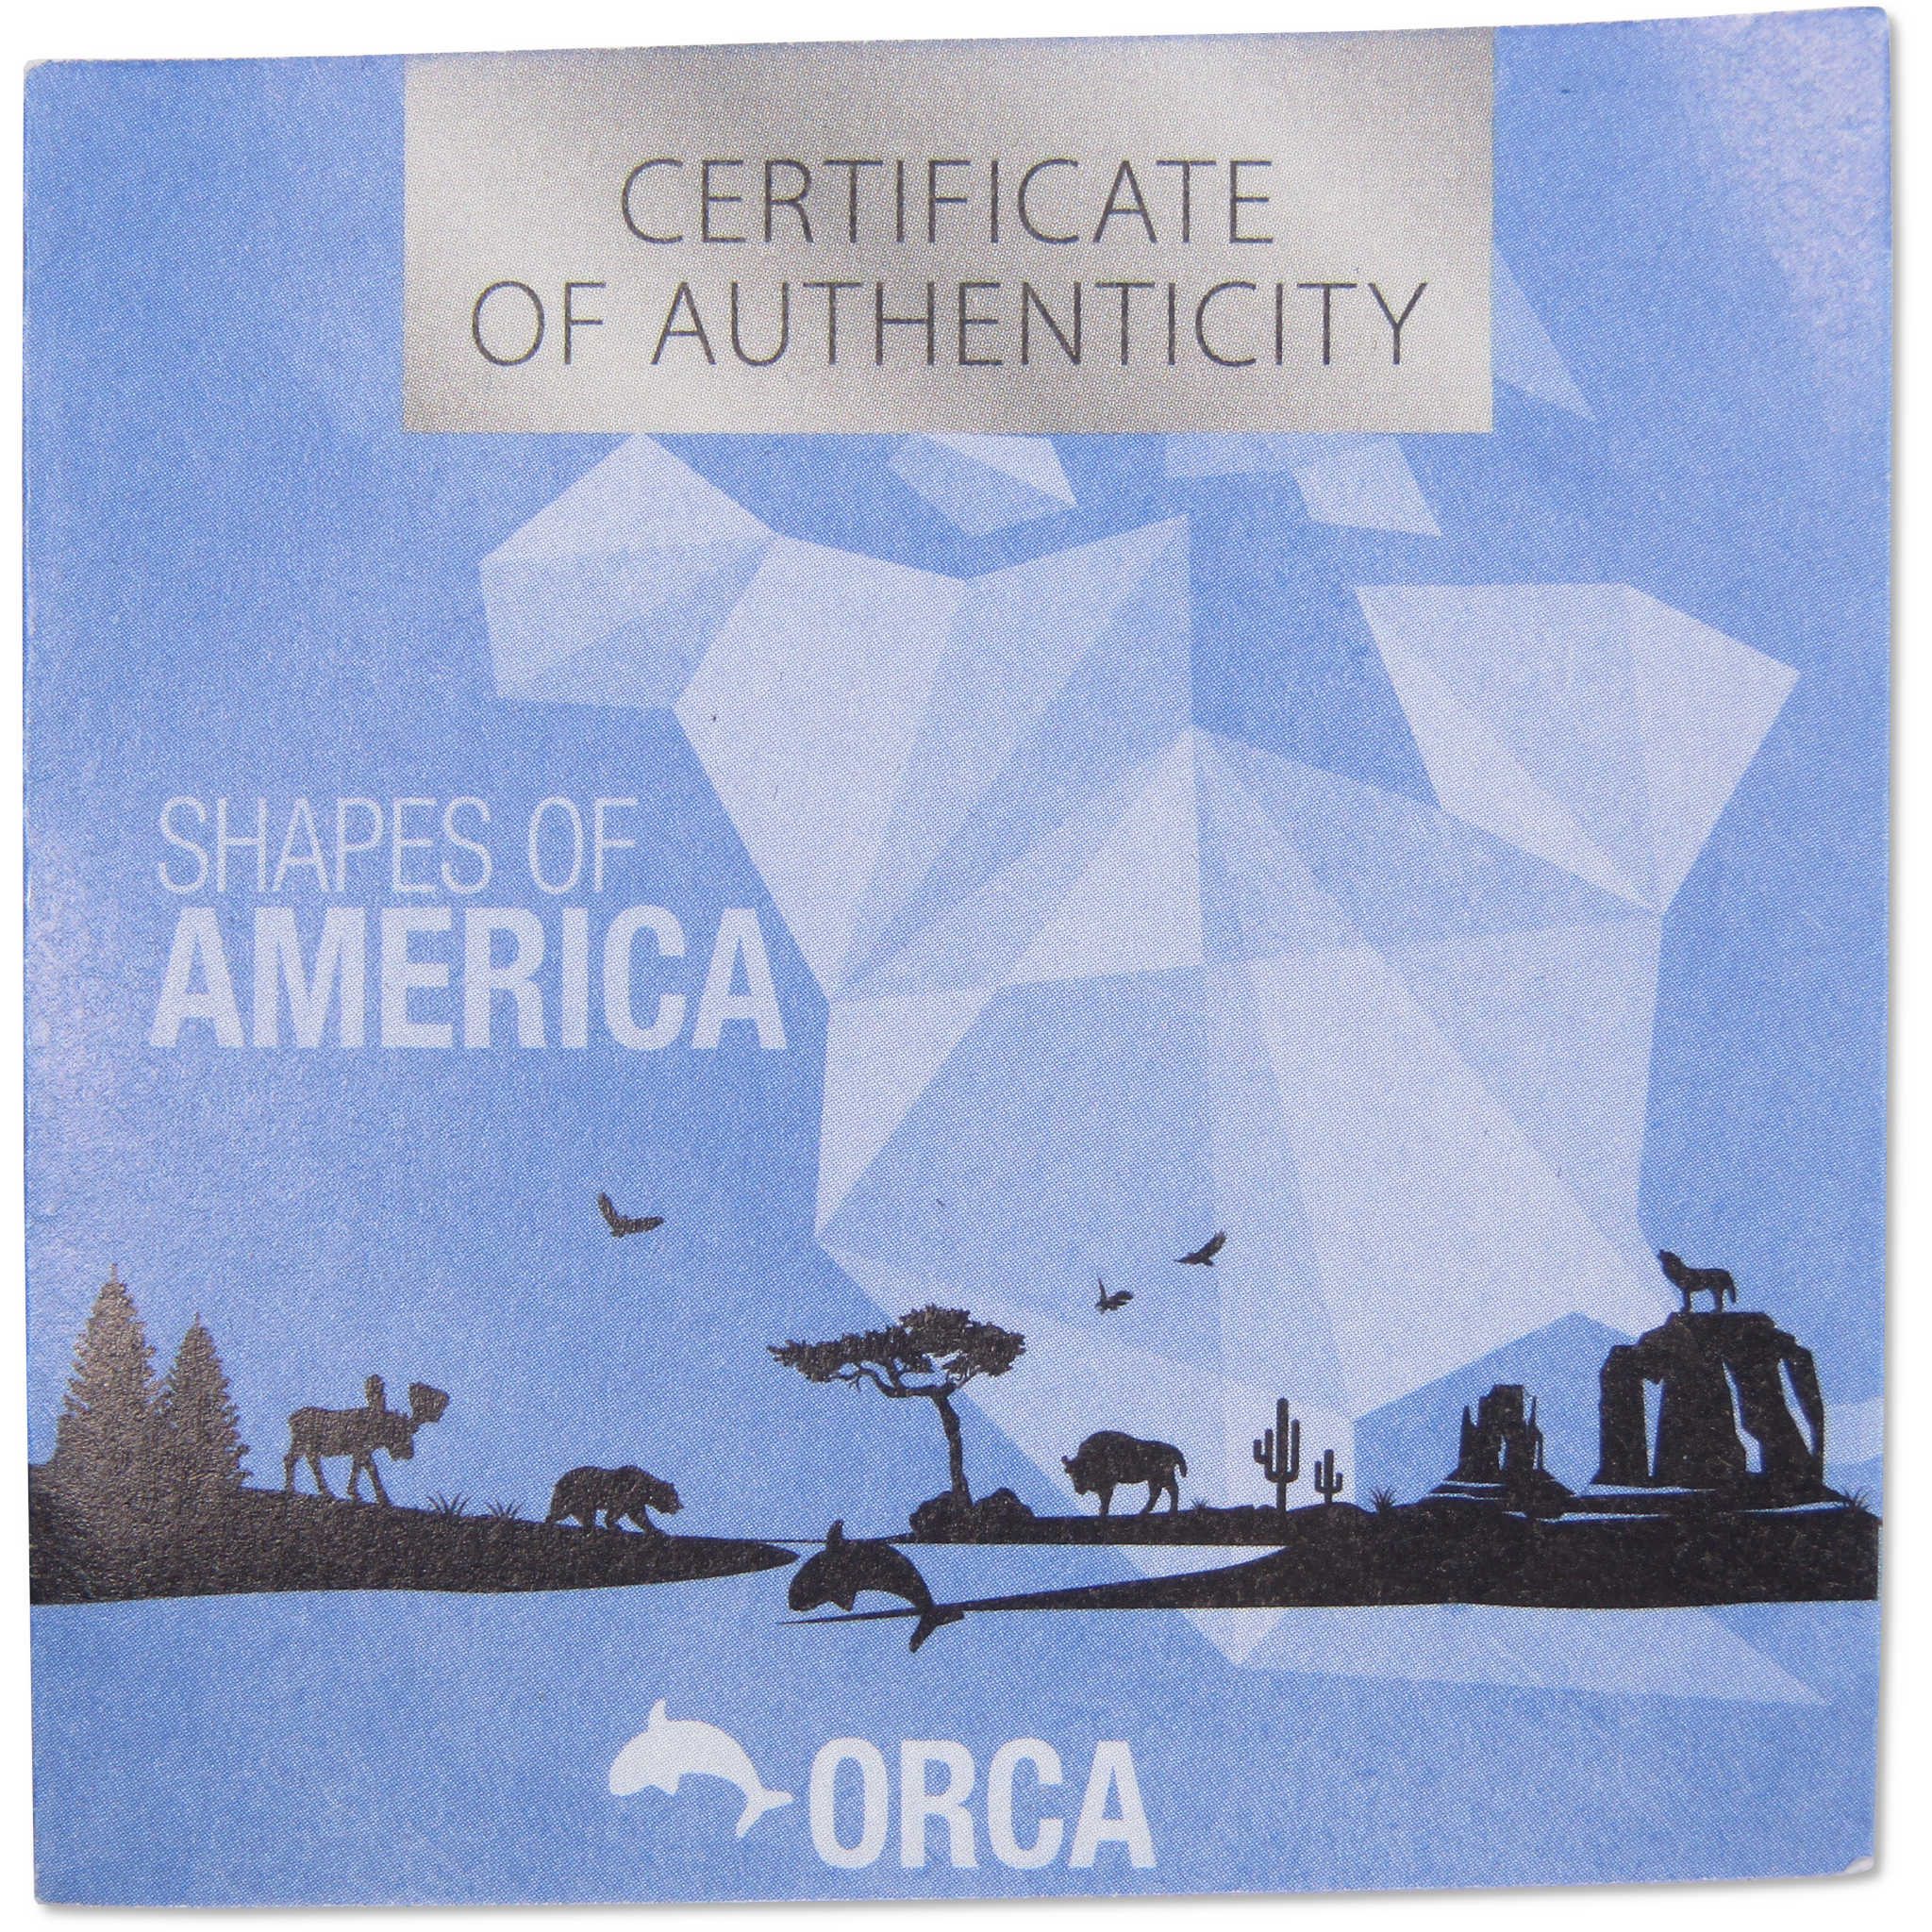 Shapes of America Orca 1 oz .999 Silver $5 Proof-Like Coin 2020 Barbados COA